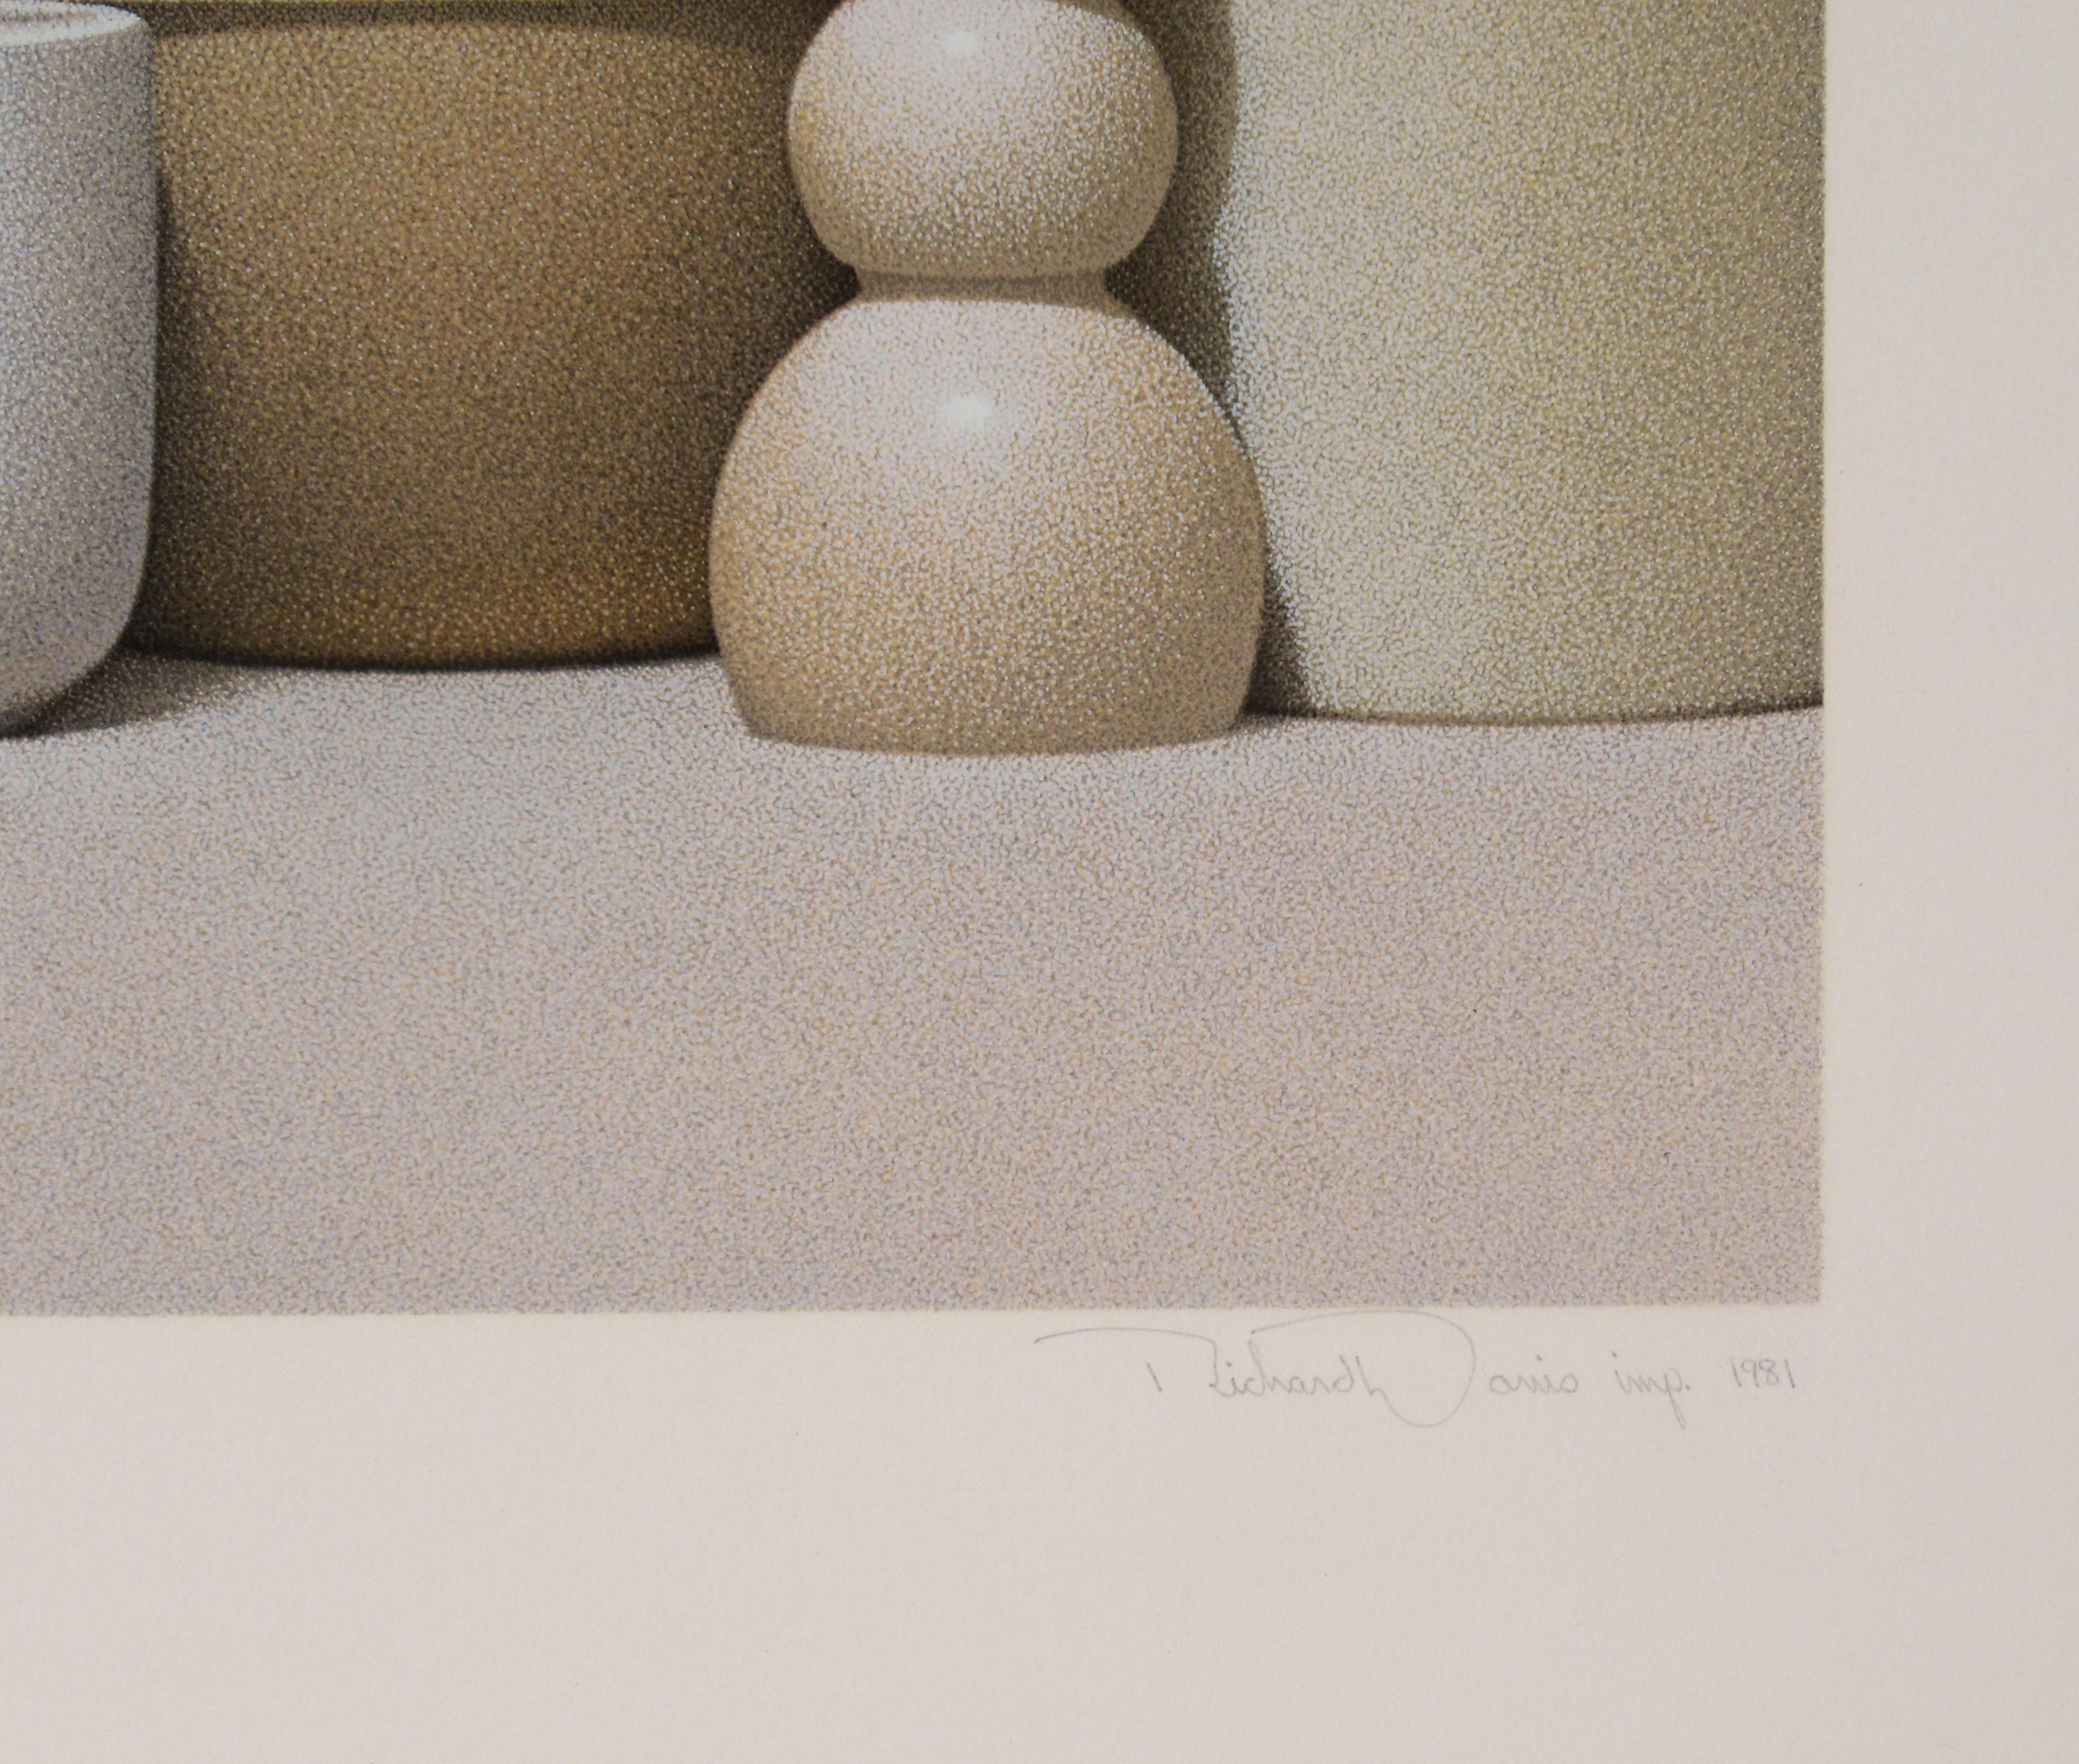 Ceramics II - Realist Print by Richard Thomas Davis